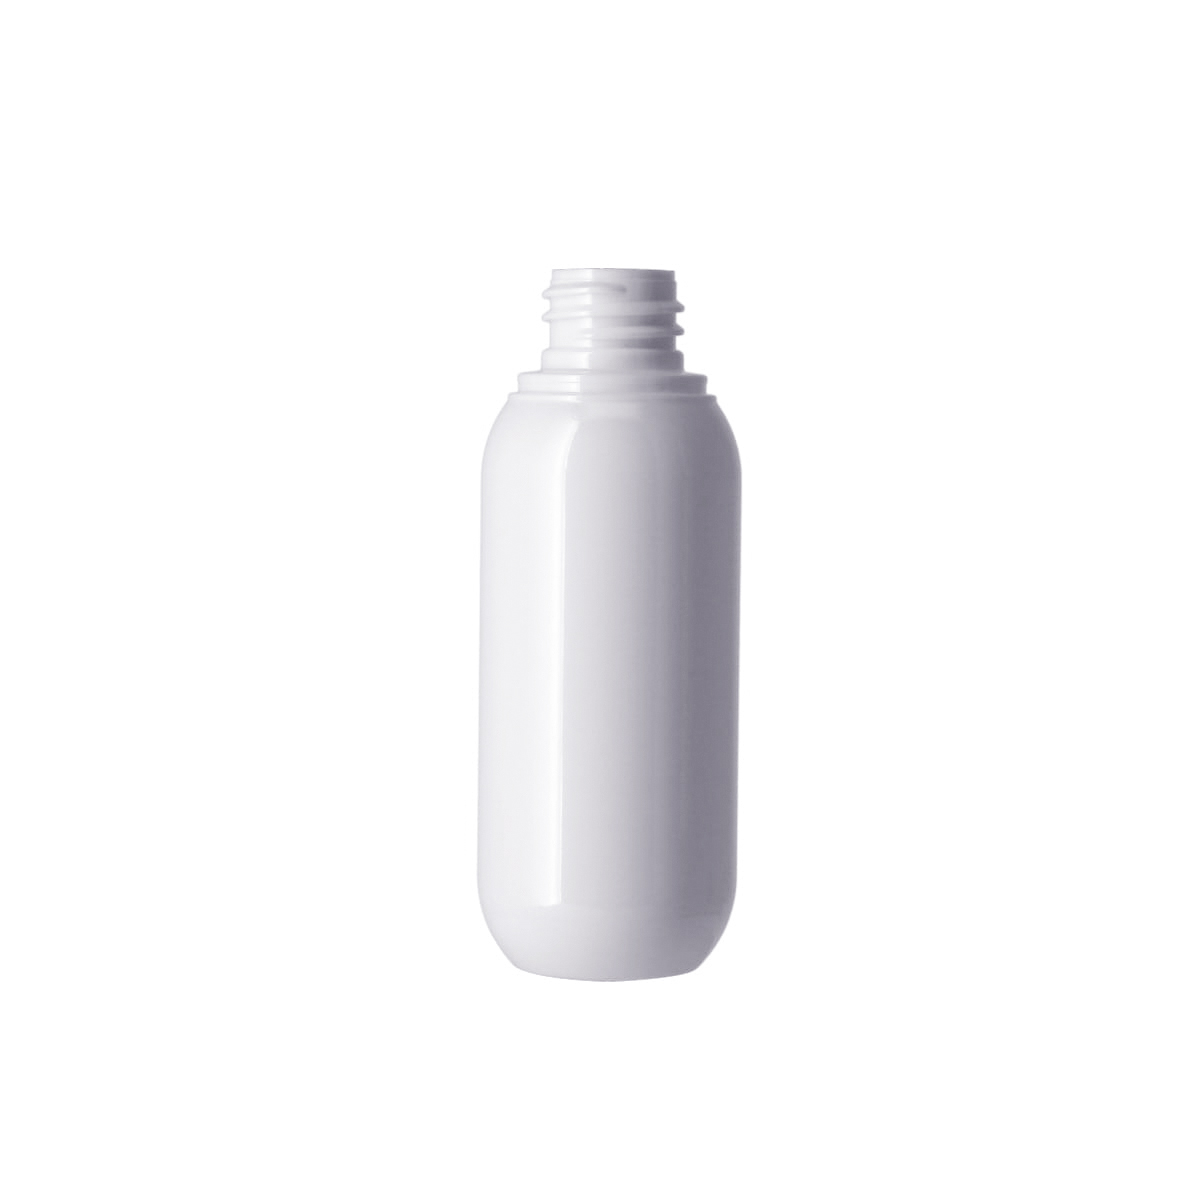 PETG瓶,100ml以下,PETG瓶,旅行組商品,洗髮精,沐浴乳,乳液